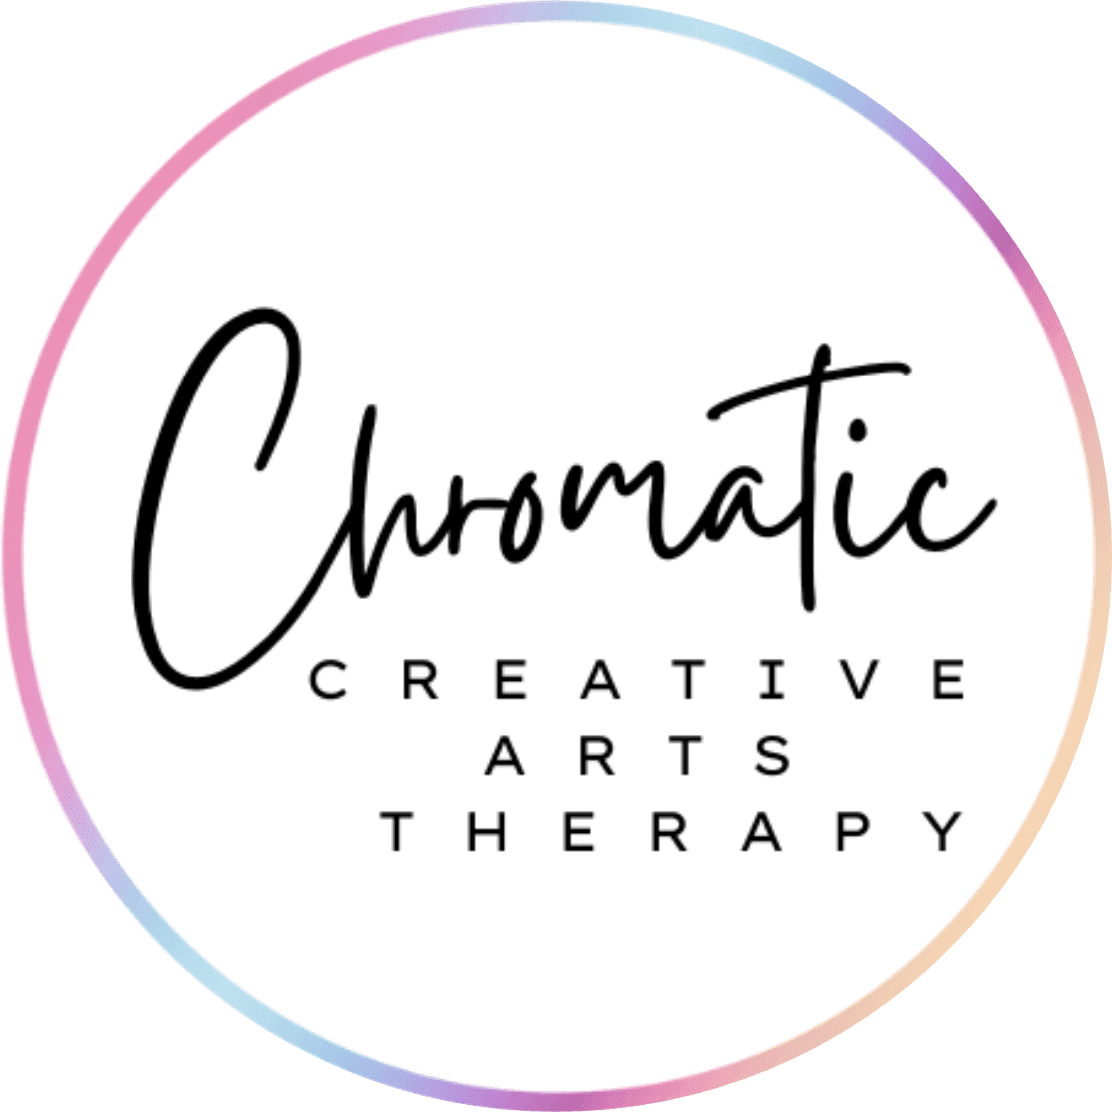 Chromatic Creative Arts Therapy, LLC